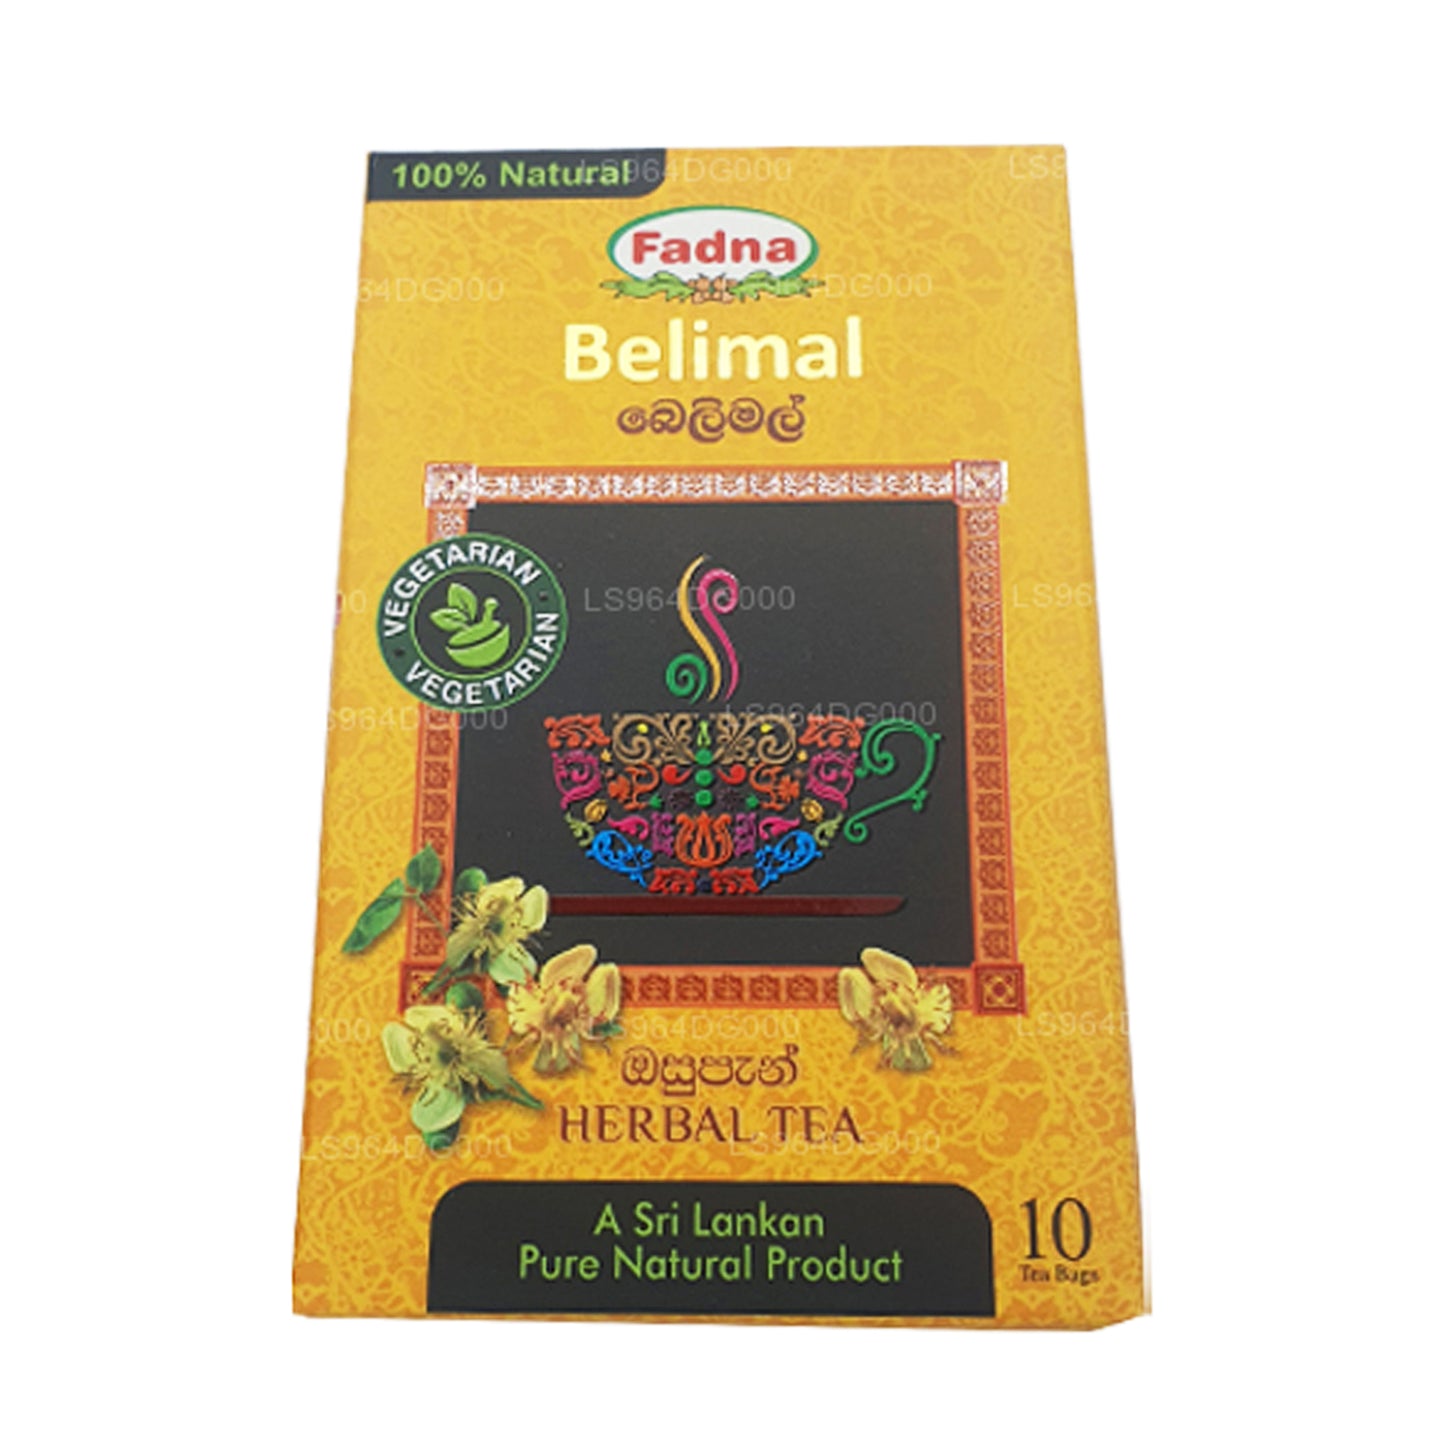 Fadna Belimal Herbal Tea (20g) 10 Tea Bags